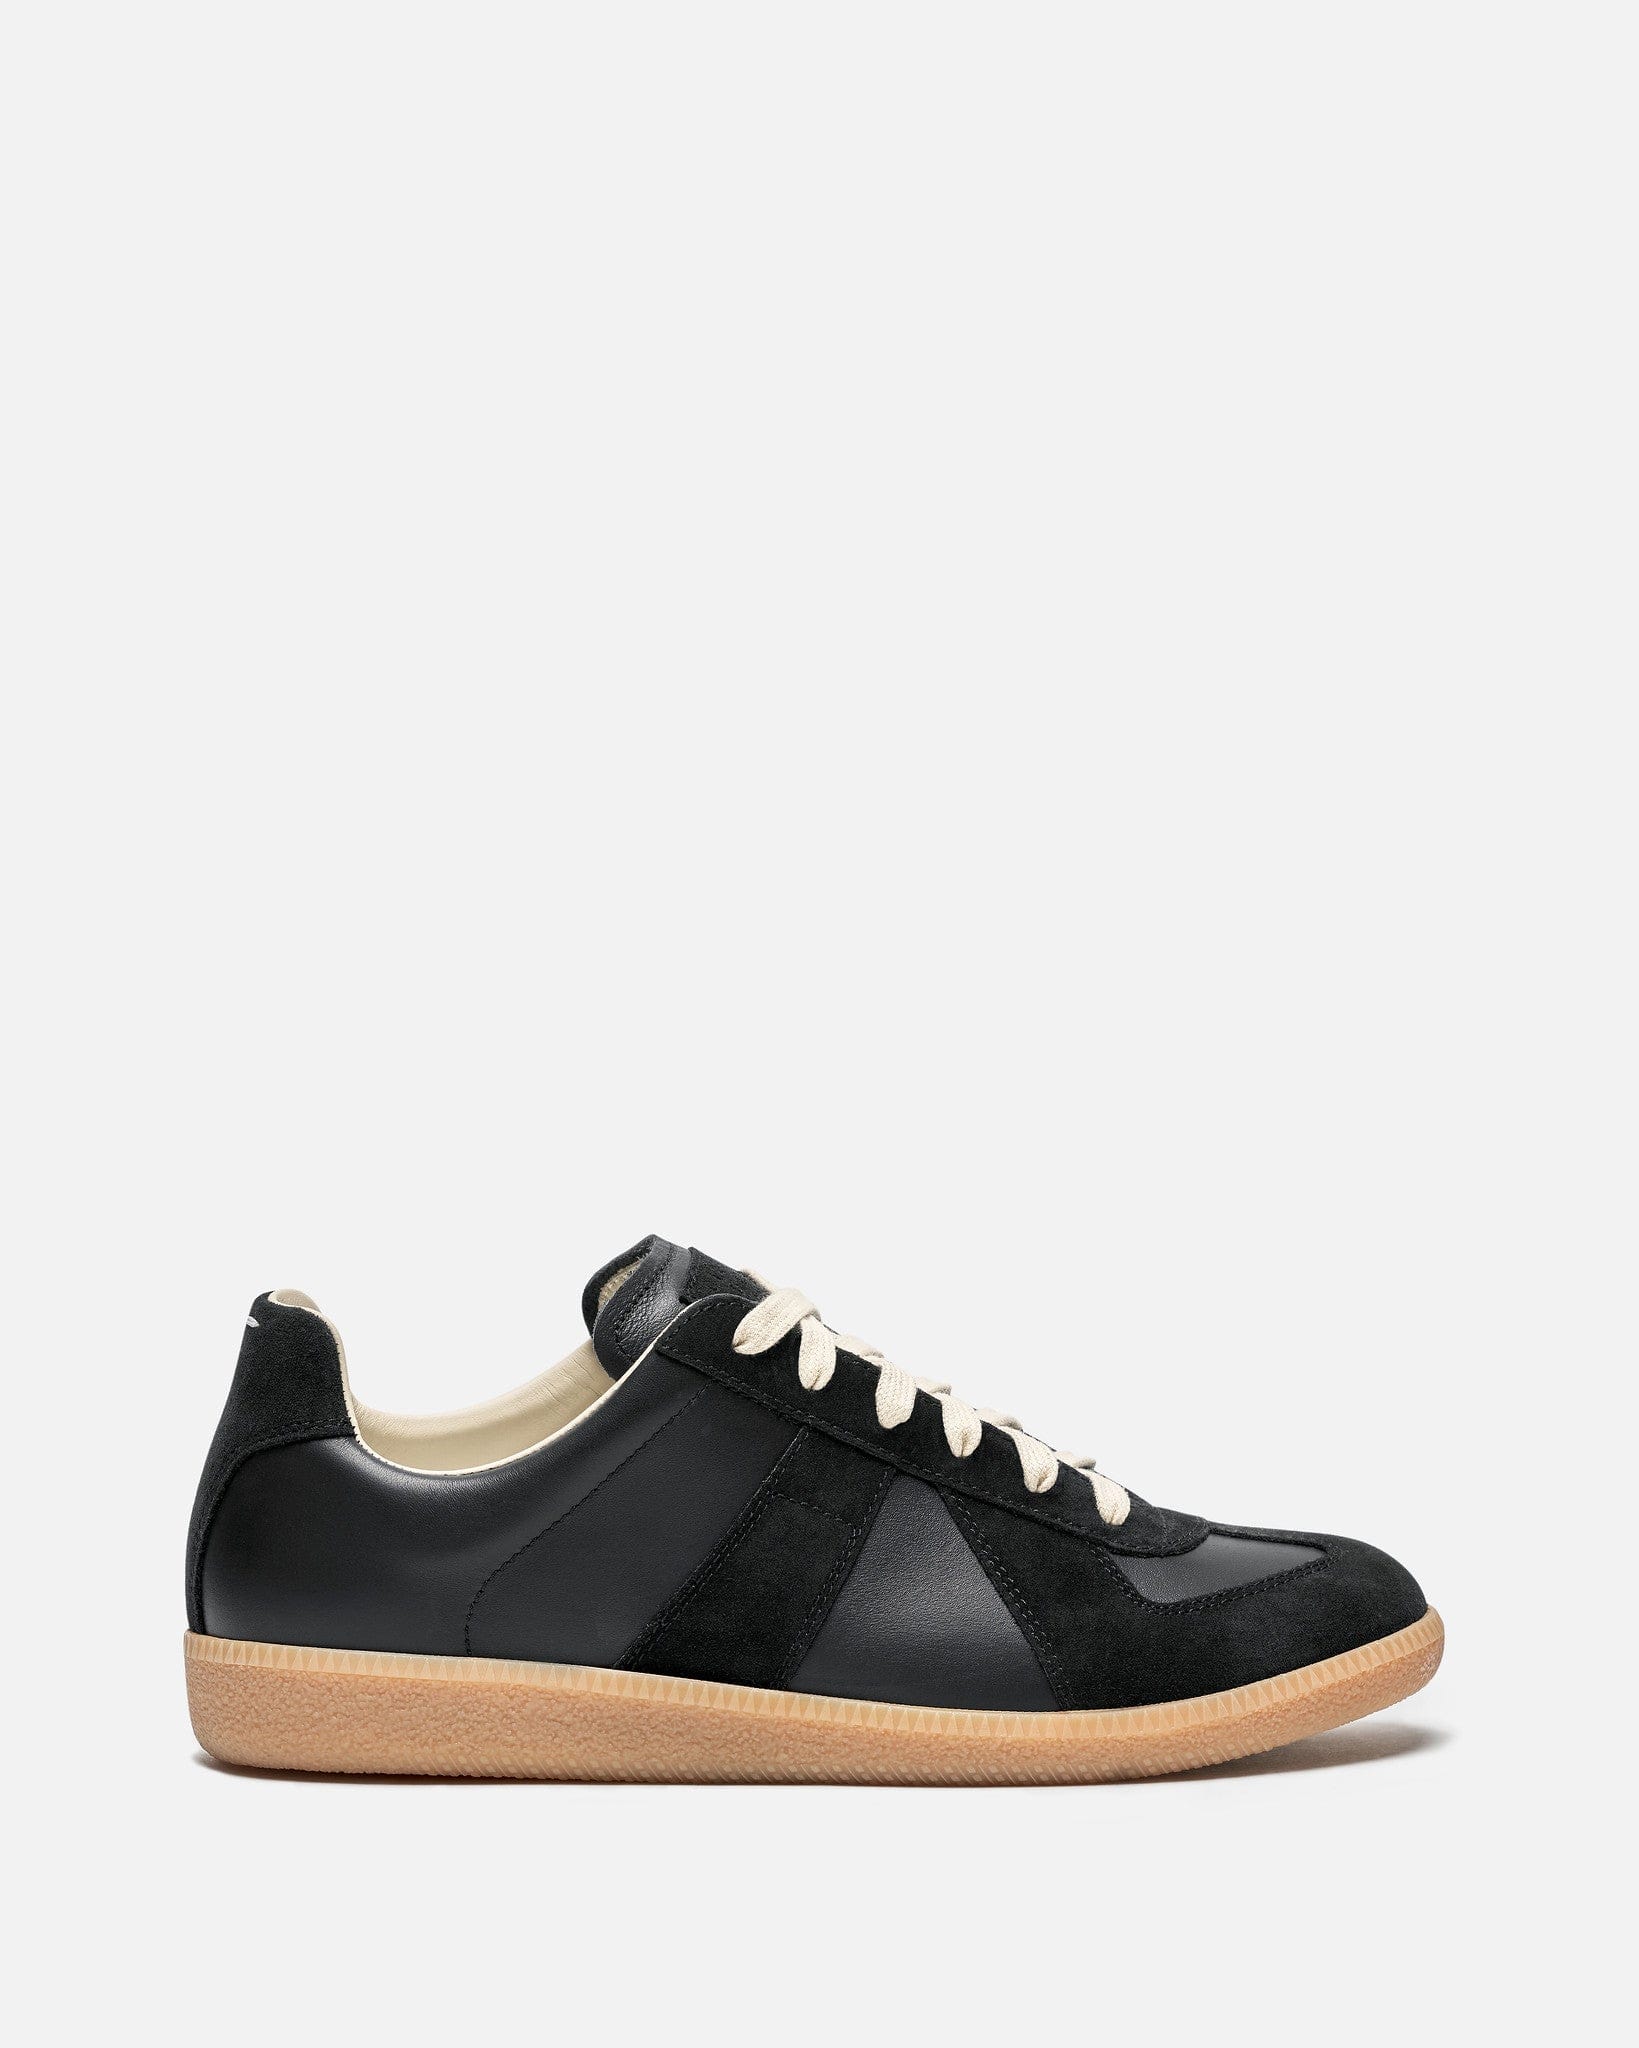 Maison Margiela Men's Shoes Replica Sneakers in Black/Gum